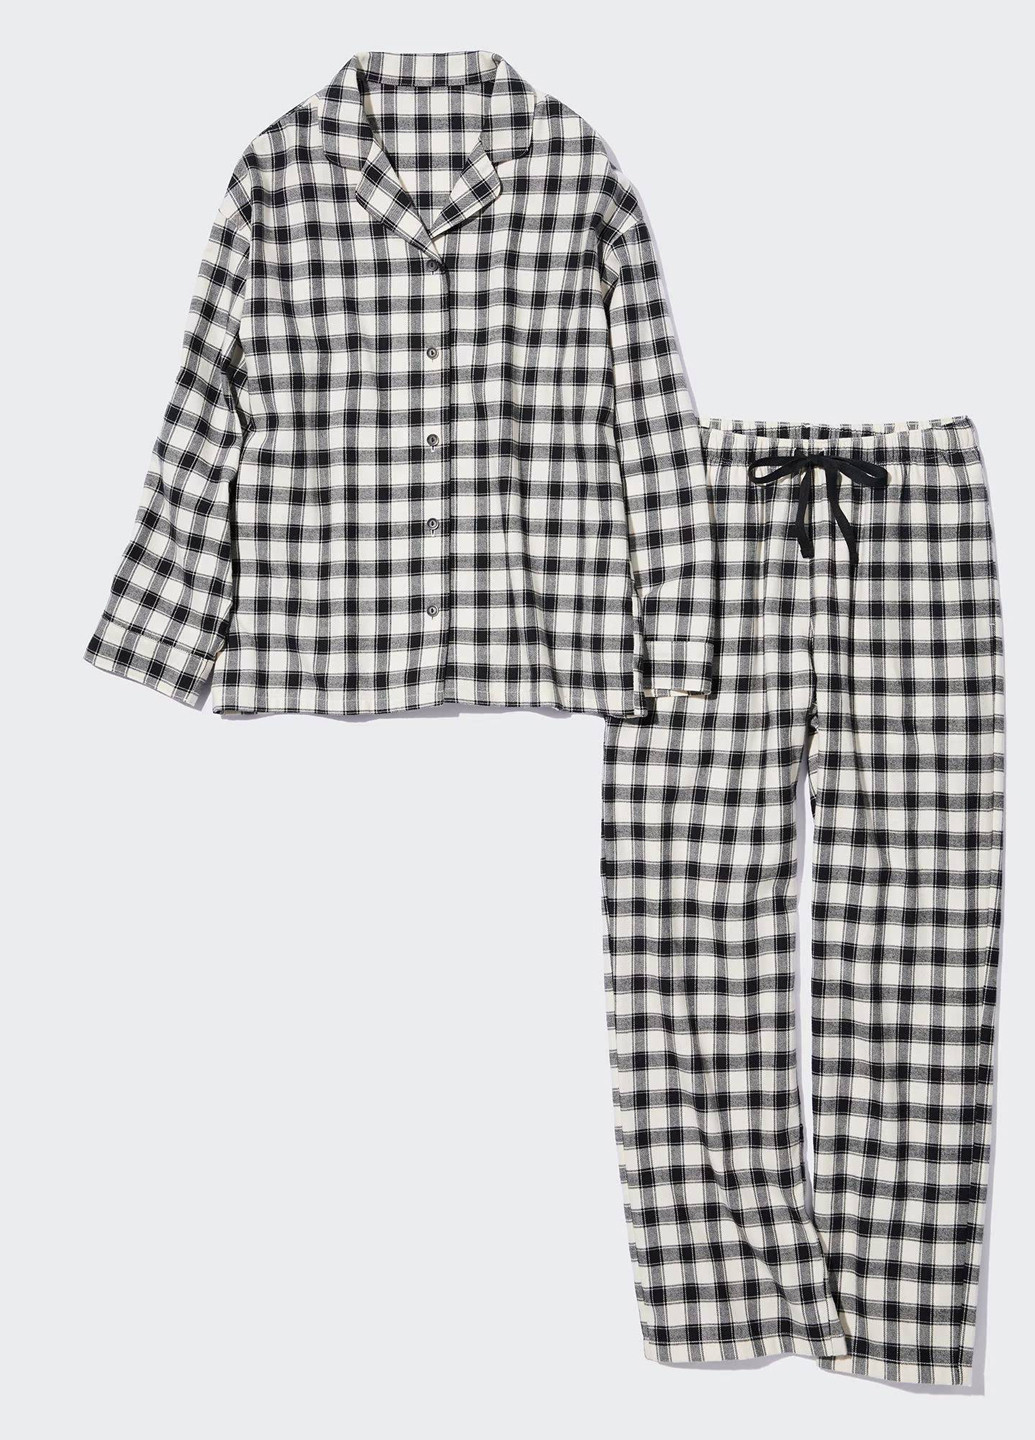 Черно-белая всесезон пижама (рубашка, брюки) рубашка + брюки Uniqlo